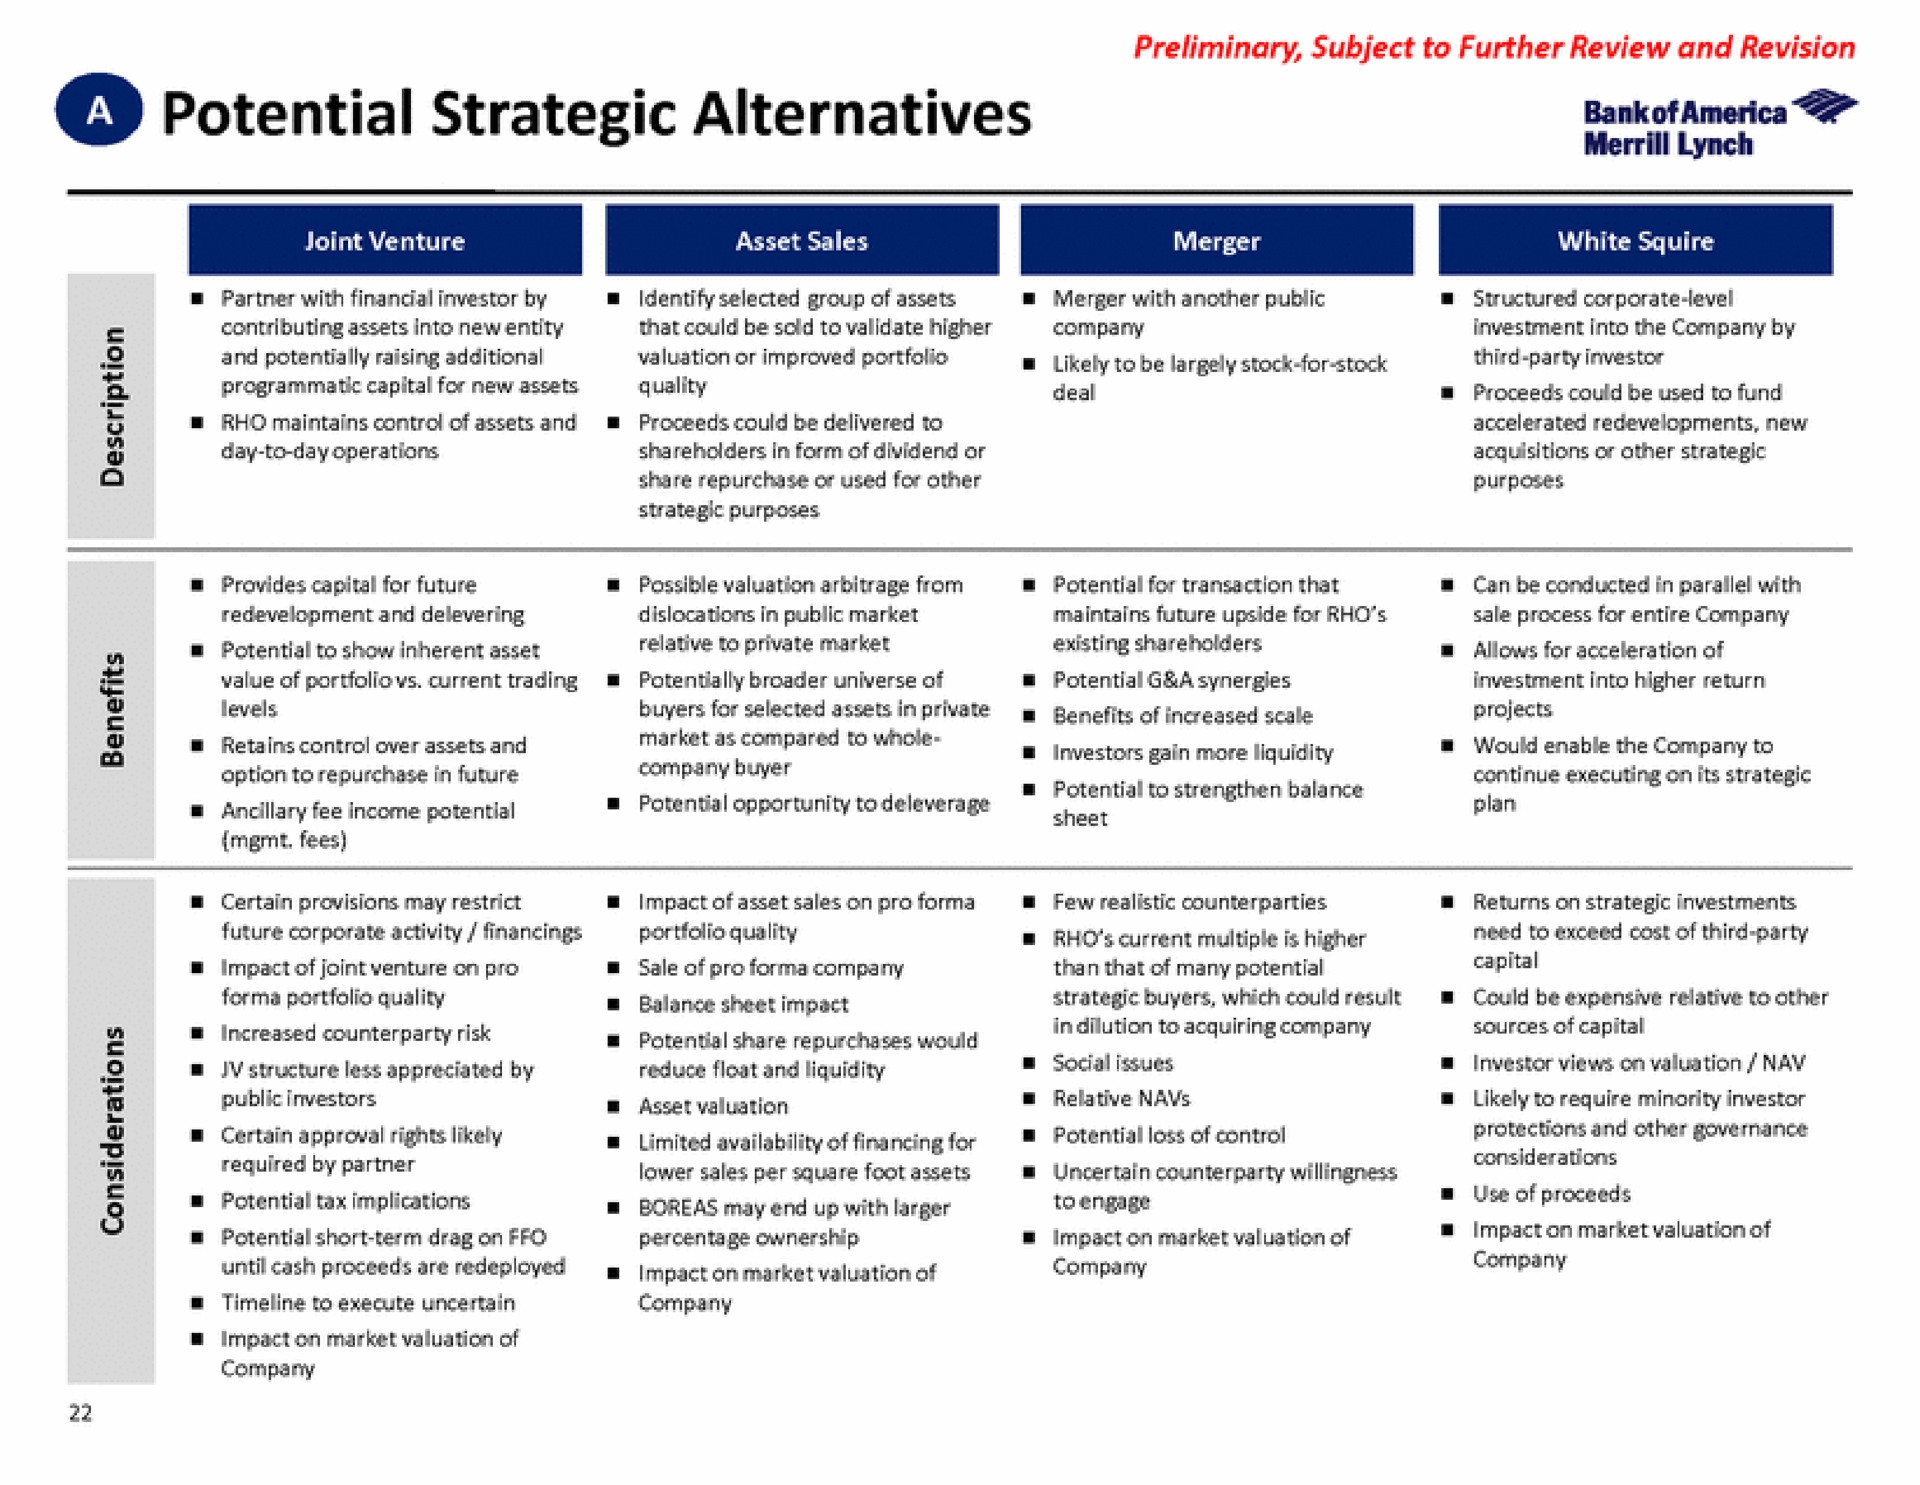 potential strategic alternatives lynch | Bank of America